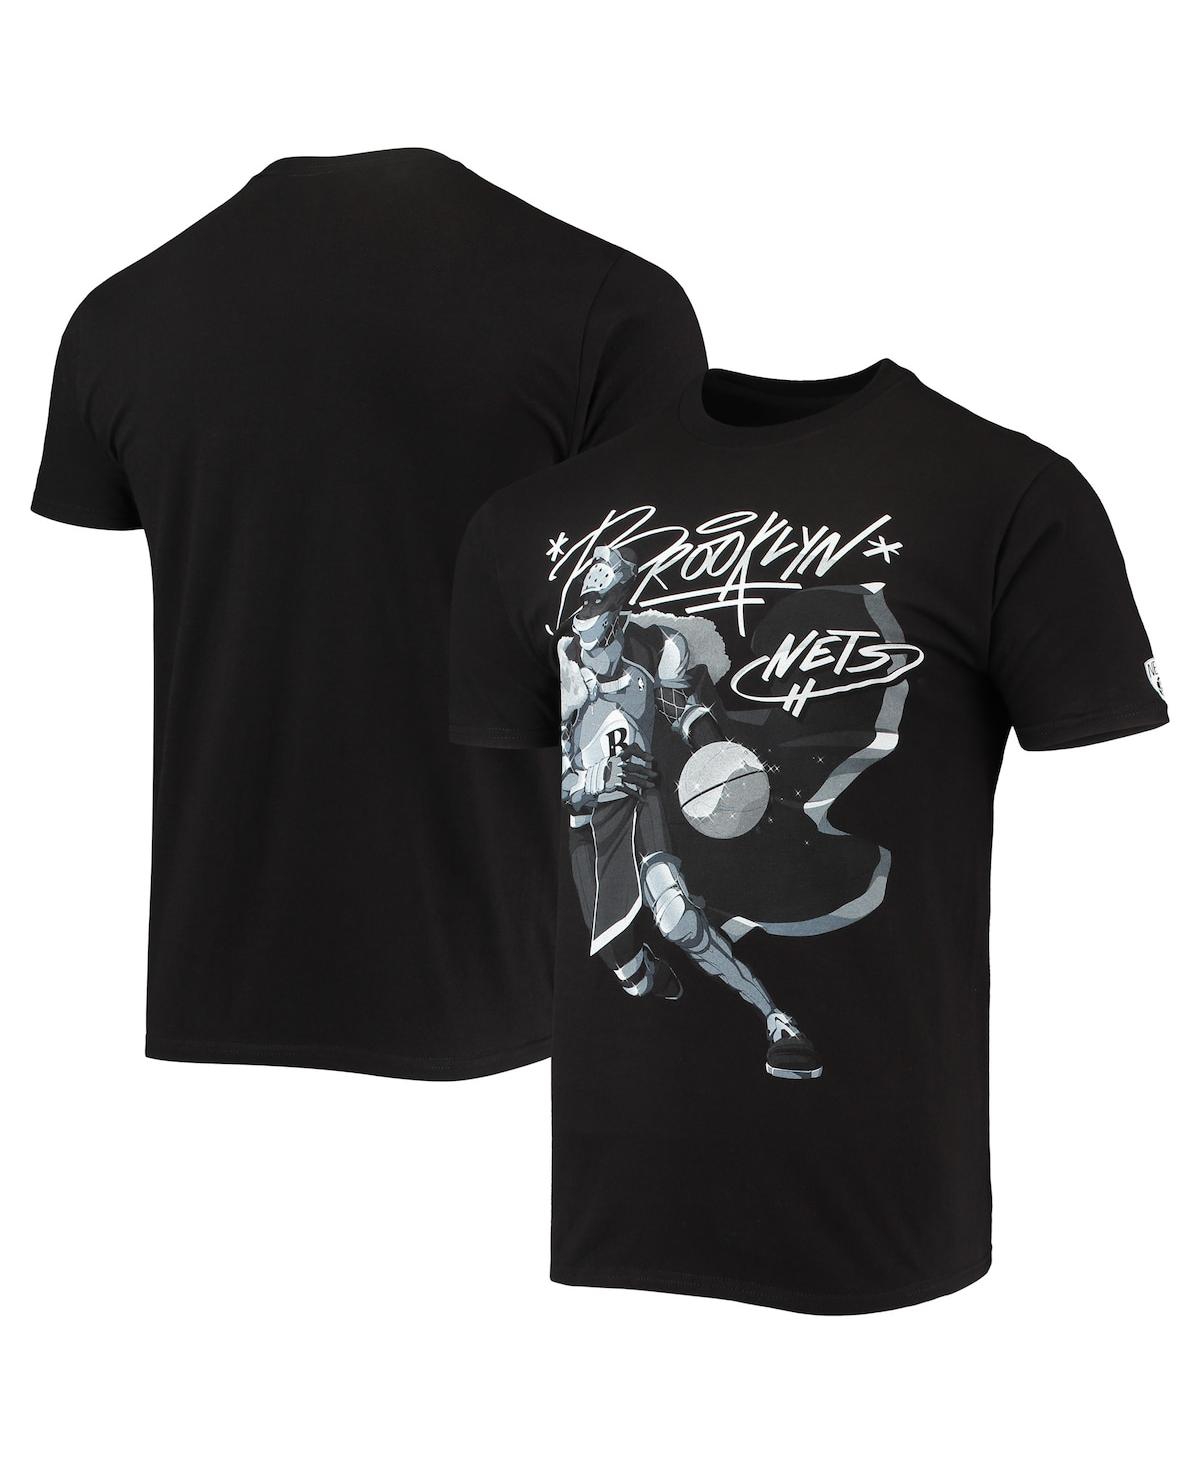 Men's Nba x McFlyy Black Brooklyn Nets Identify Artist Series T-shirt - Black